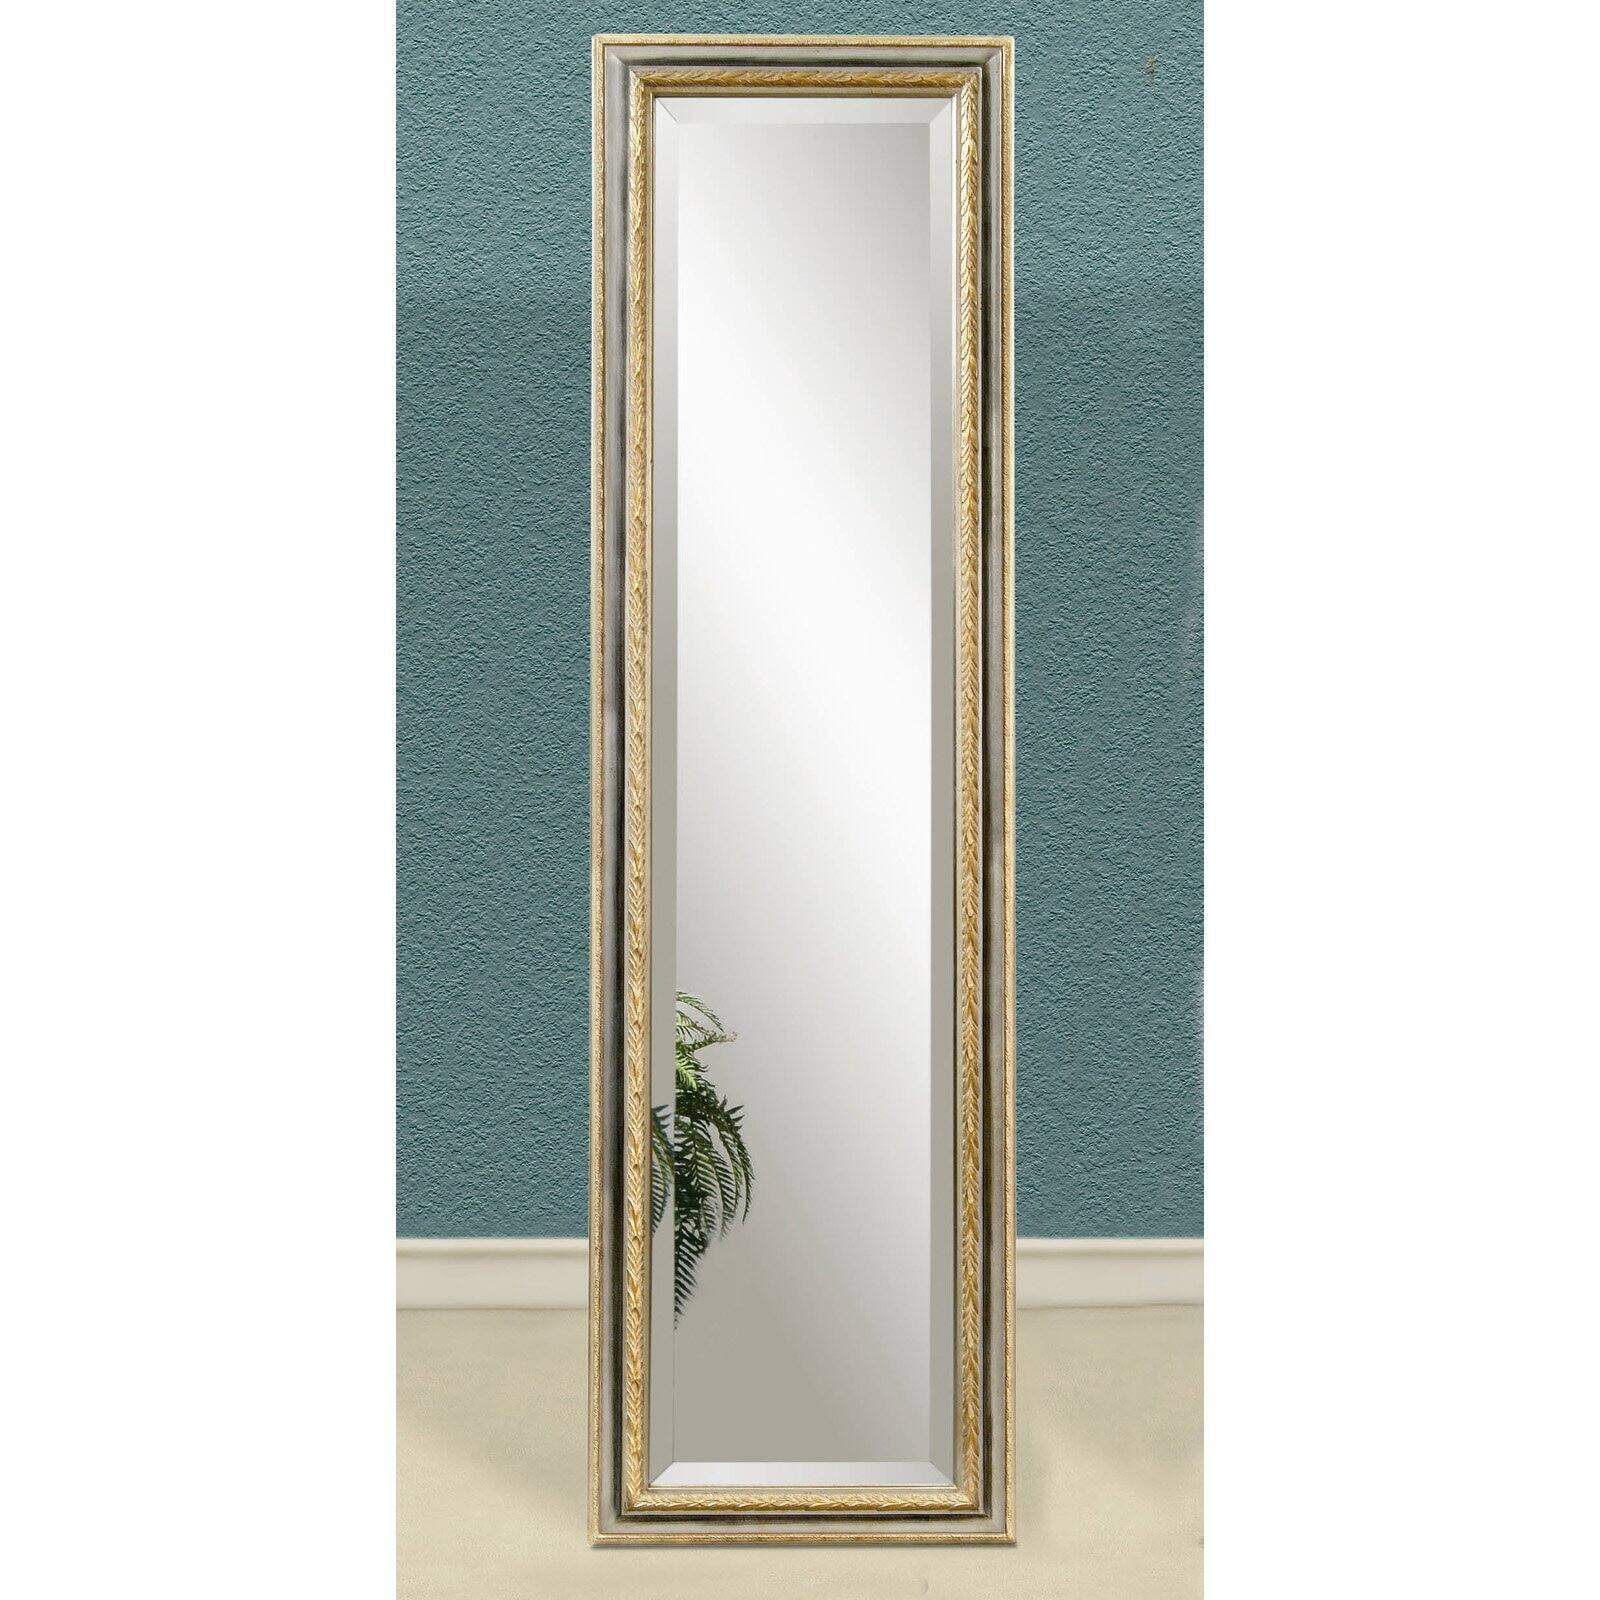 Gold Full Length Cheval Floor Mirror, Floor Mirror Silver Metallic